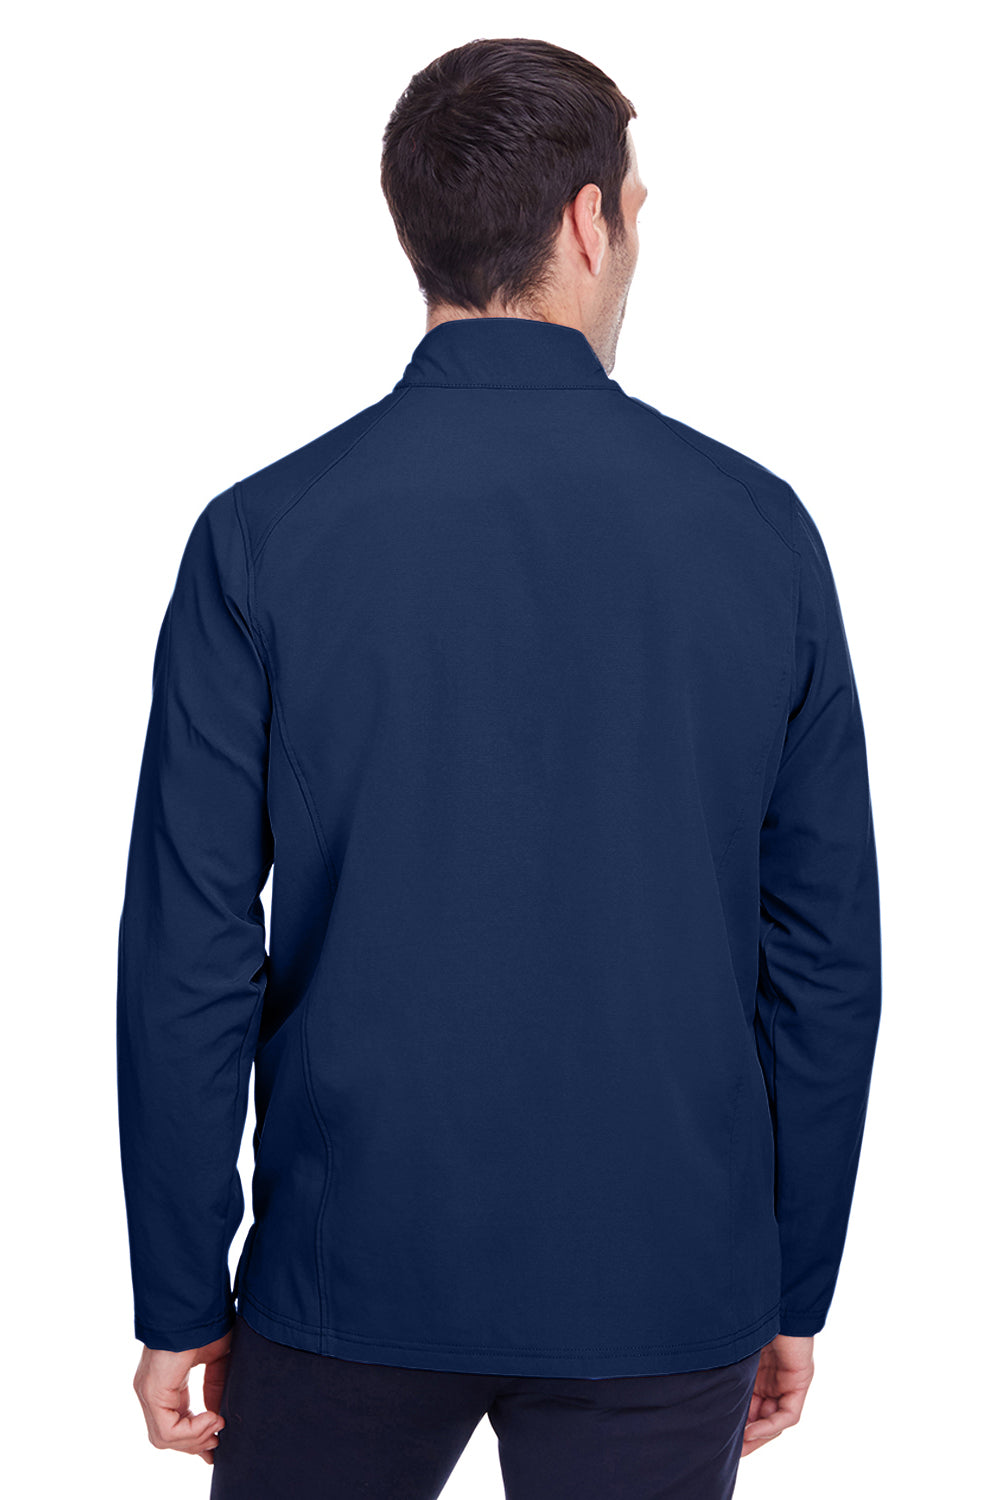 North End NE401 Mens Quest Performance Moisture Wicking 1/4 Zip Sweatshirt Navy Blue/Carbon Grey Back